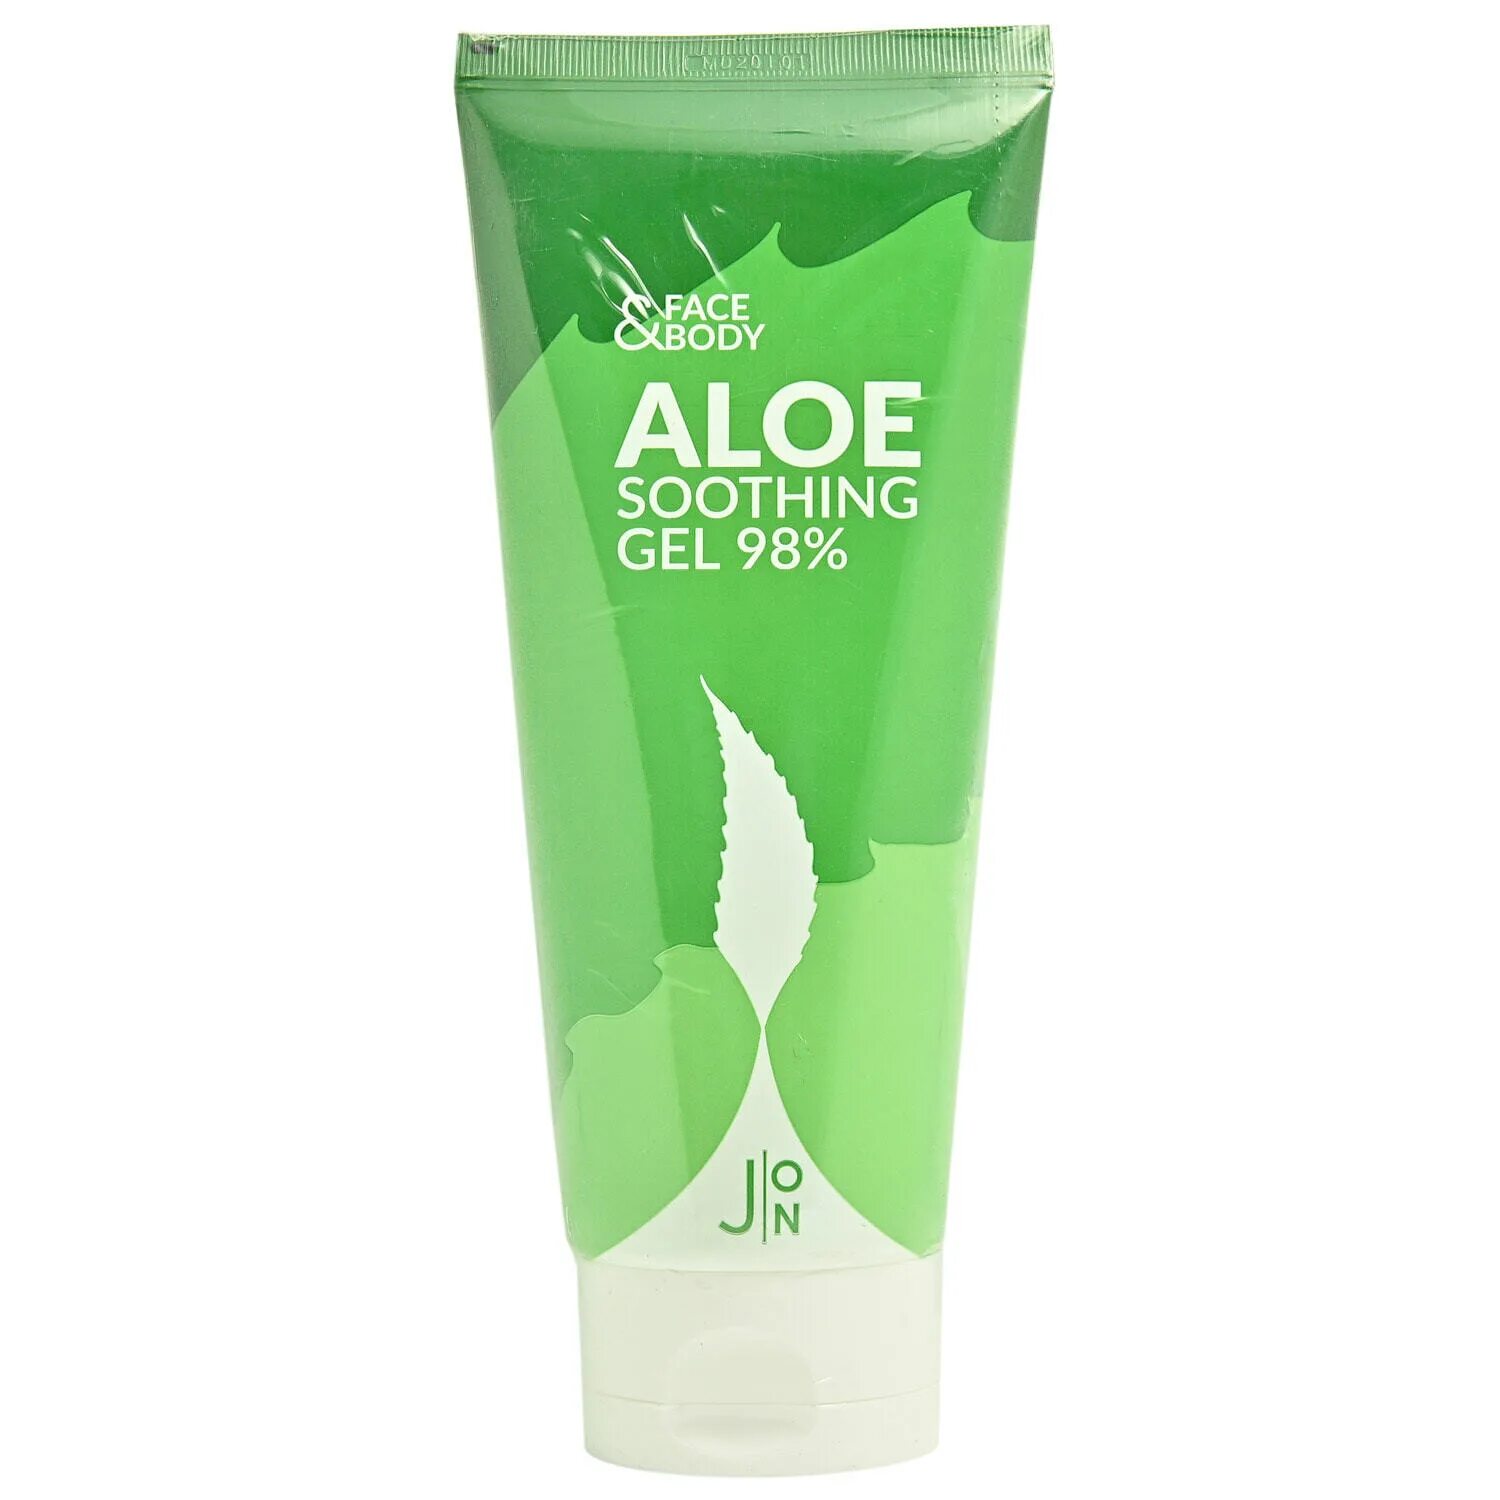 [J:on] гель универсальный алоэ face & body Aloe Soothing Gel 98%, 200 мл. J:on Aloe Soothing Gel 98%. [J:on] гель универсальный улитка face & body Snail Soothing Gel 98%, 200 мл. J on ель для кожи Aloe Soothing Gel 98%, 200 мл, 225 г. Aloe body